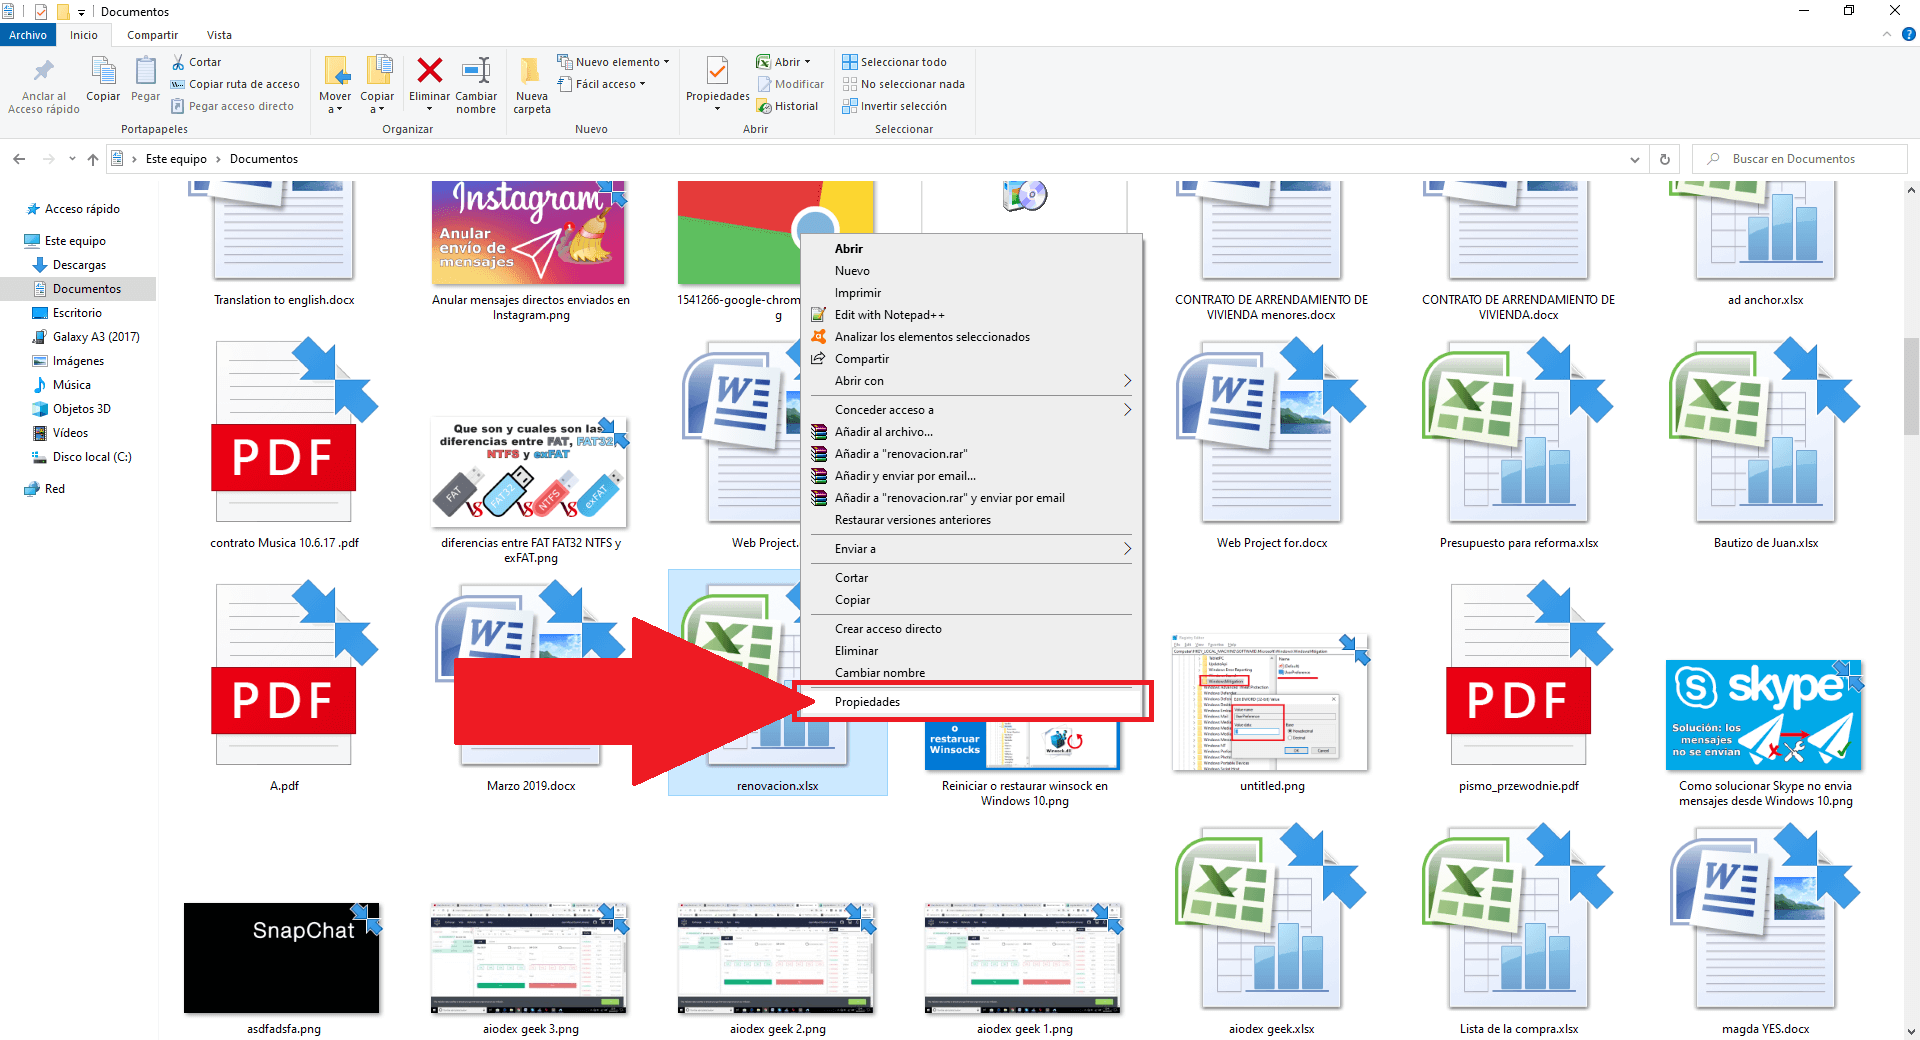 create new folder option missing windows 10